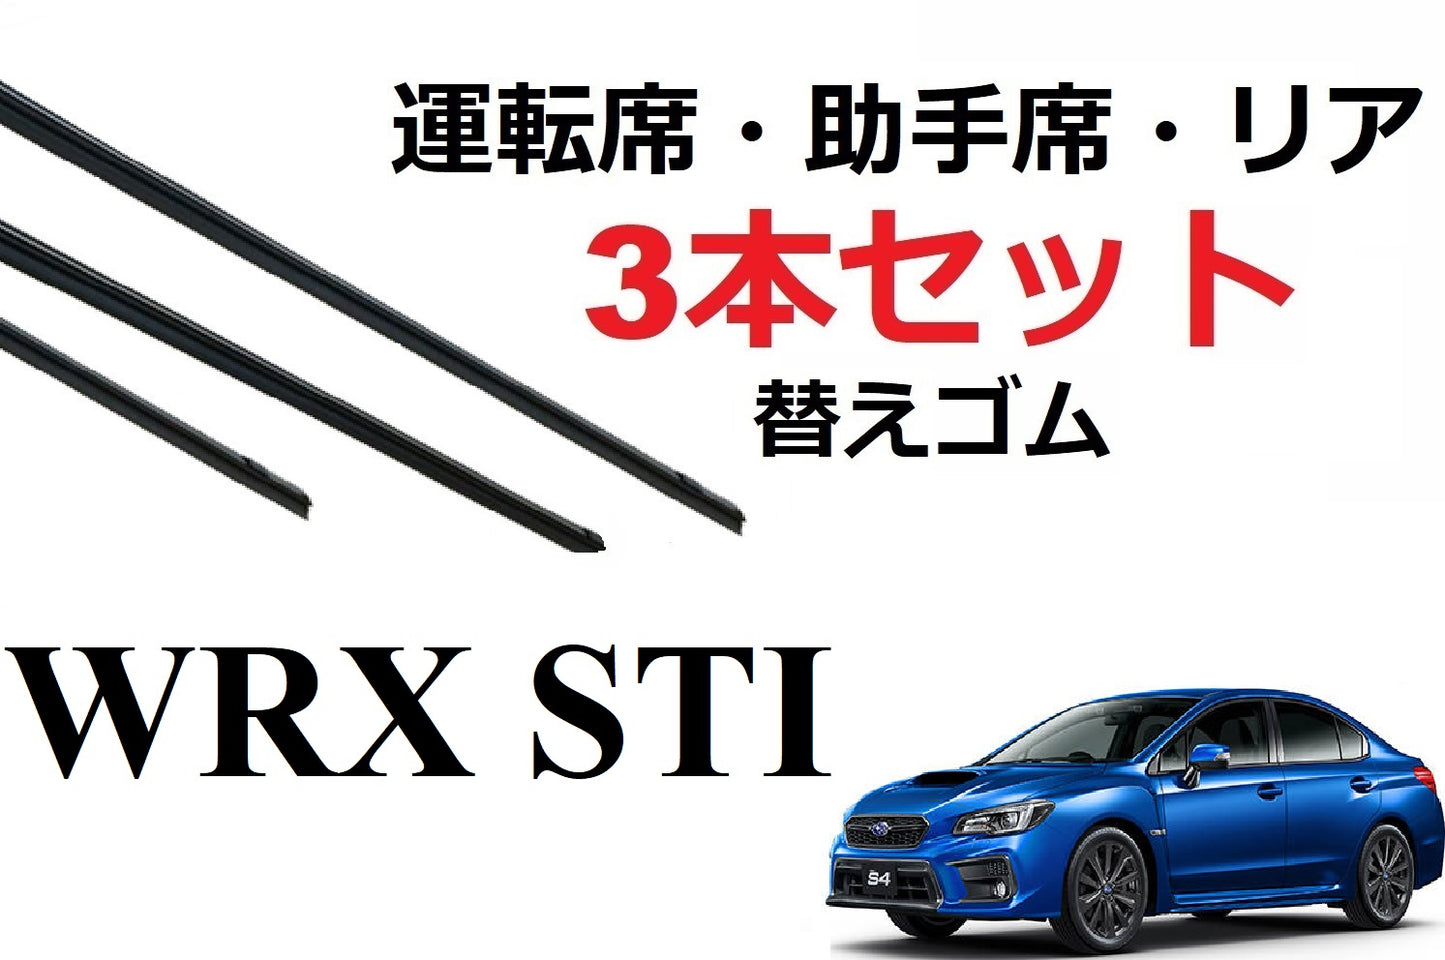 WRX STI S4 ワイパー 替えゴム 適合サイズ フロント2本 リア1本 合計3本 交換セット SUBARU 純正互換 VAB VAG SmartCustom